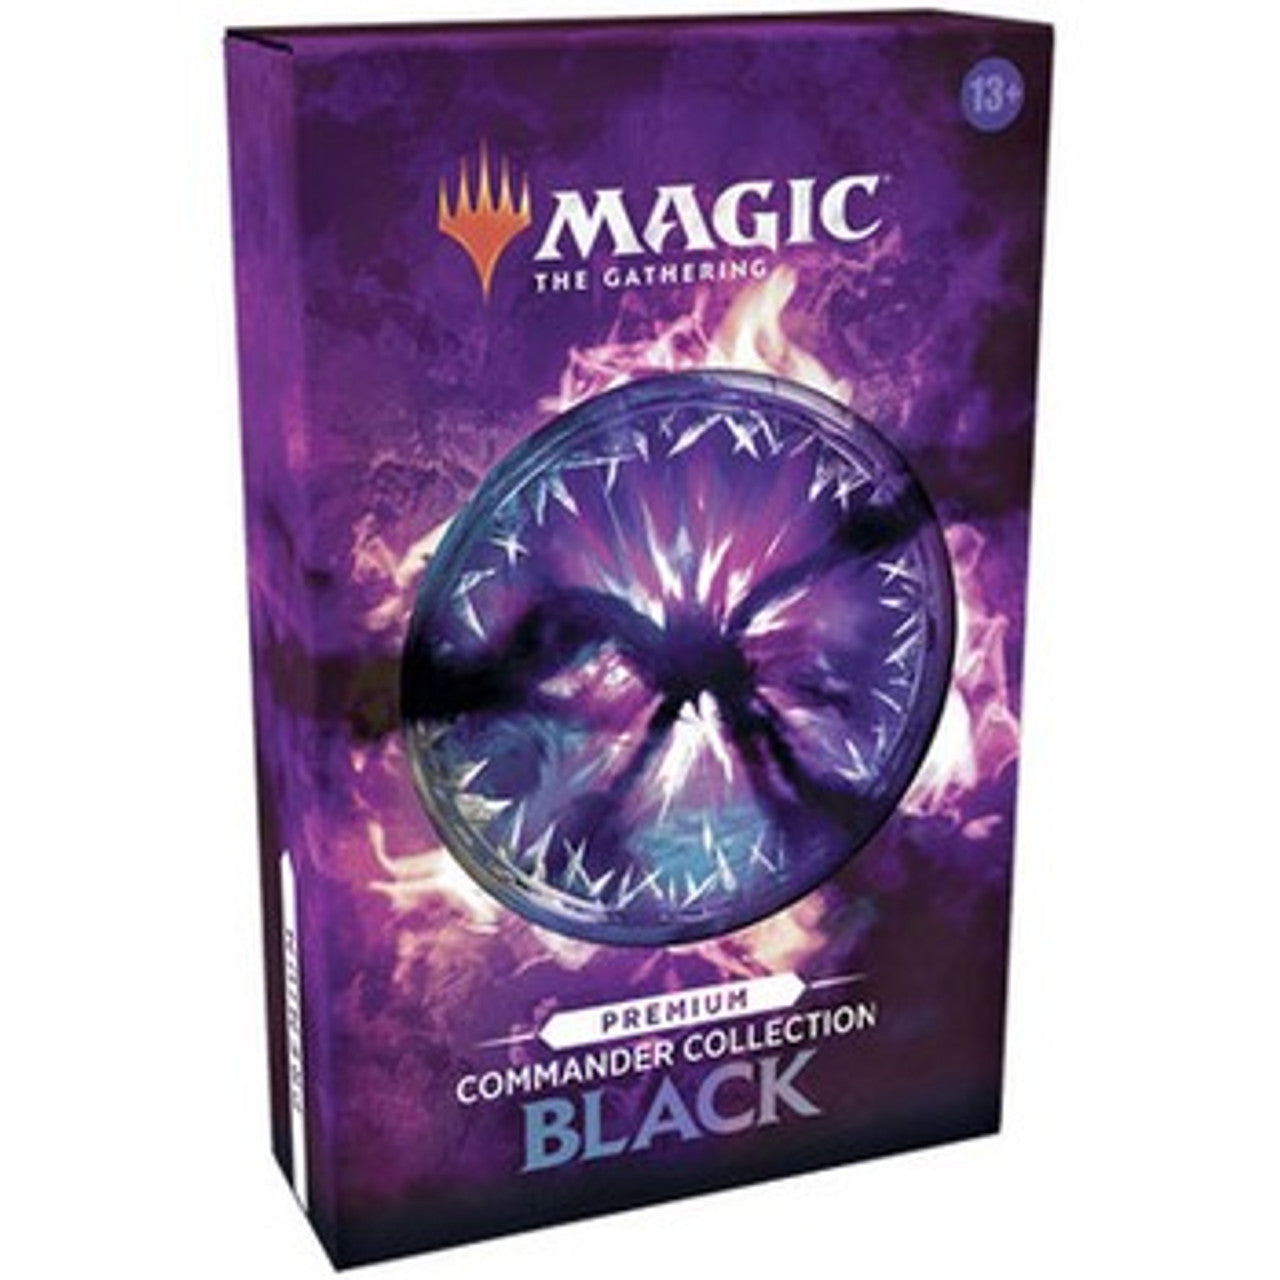 Magic: The Gathering: Commander Collection - Black Premium Edition